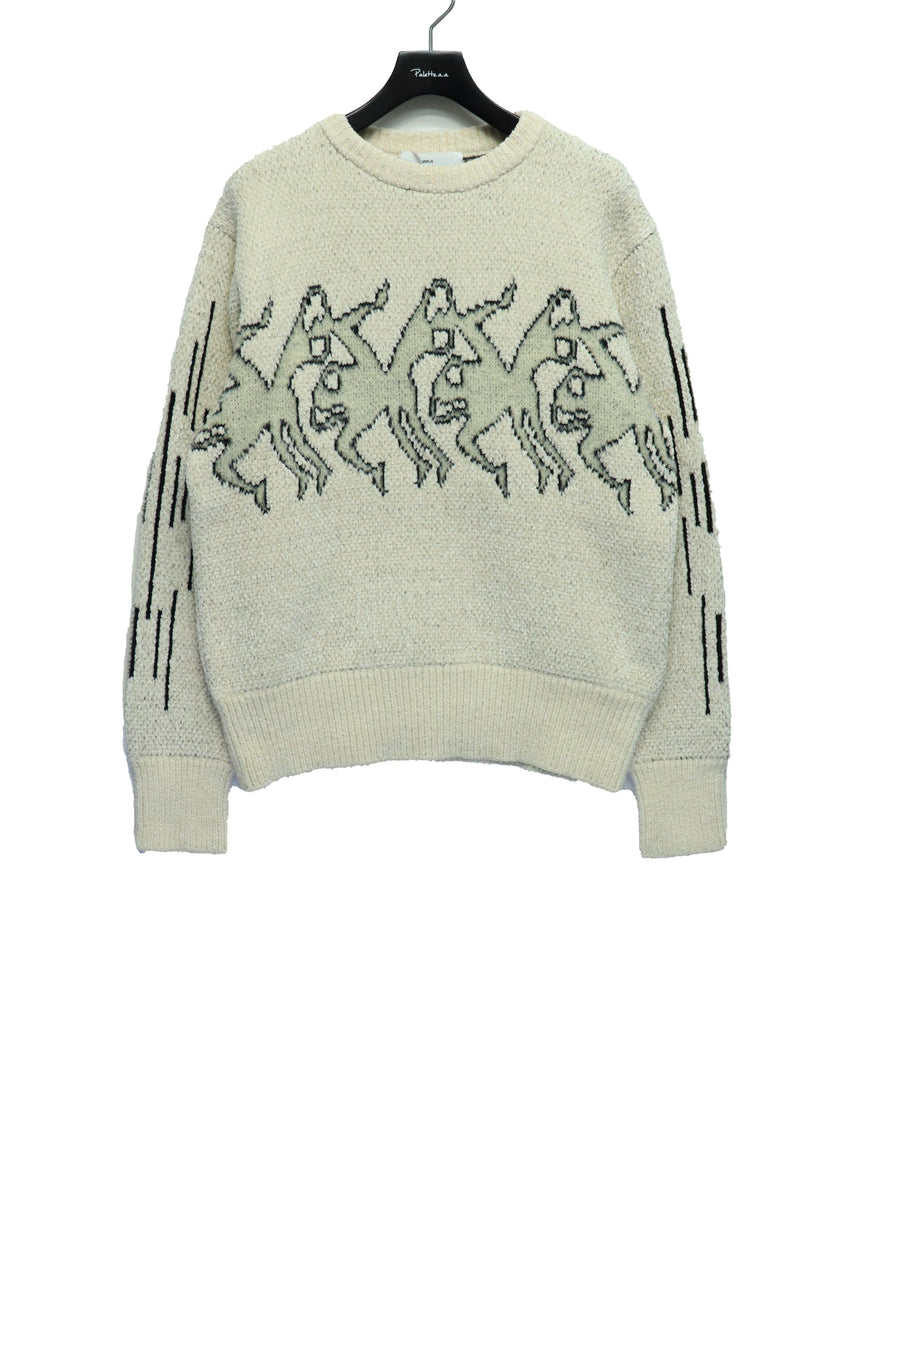 TOGA VIRILIS Jaquard knit pullover ニットかわいらしいデザインになります